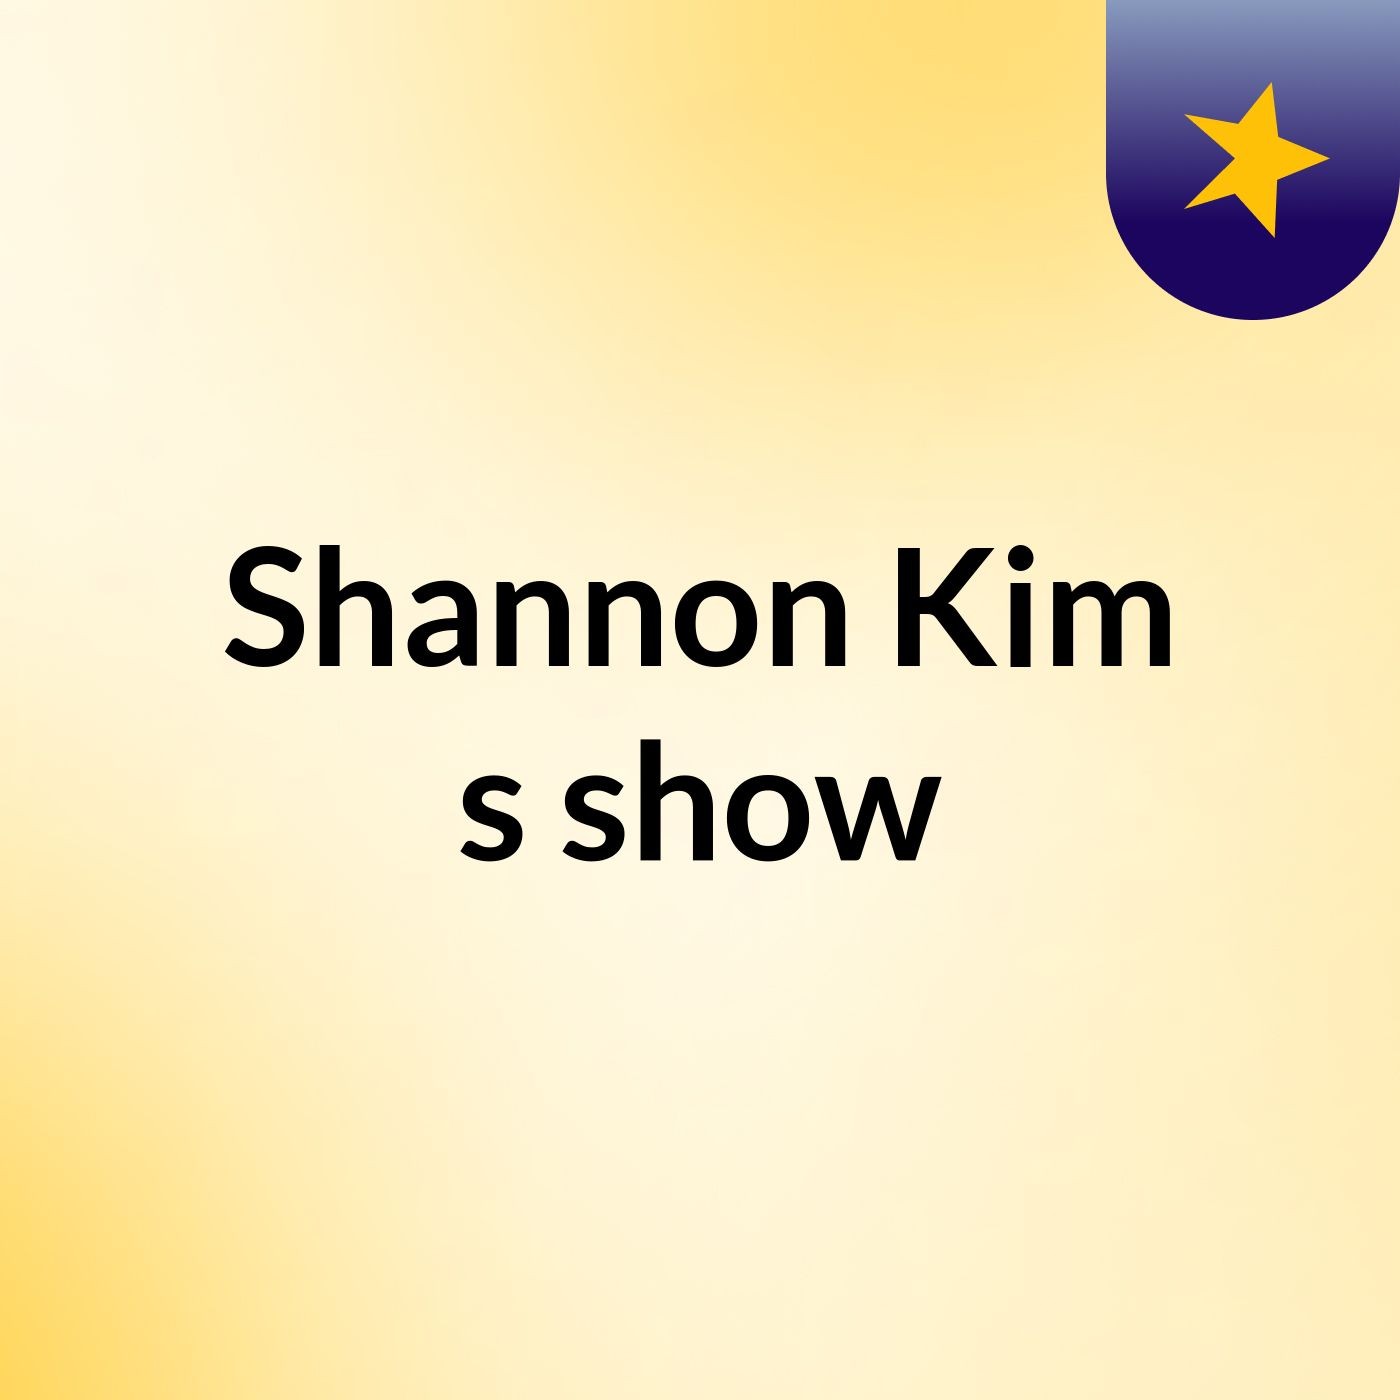 Shannon Kim's show